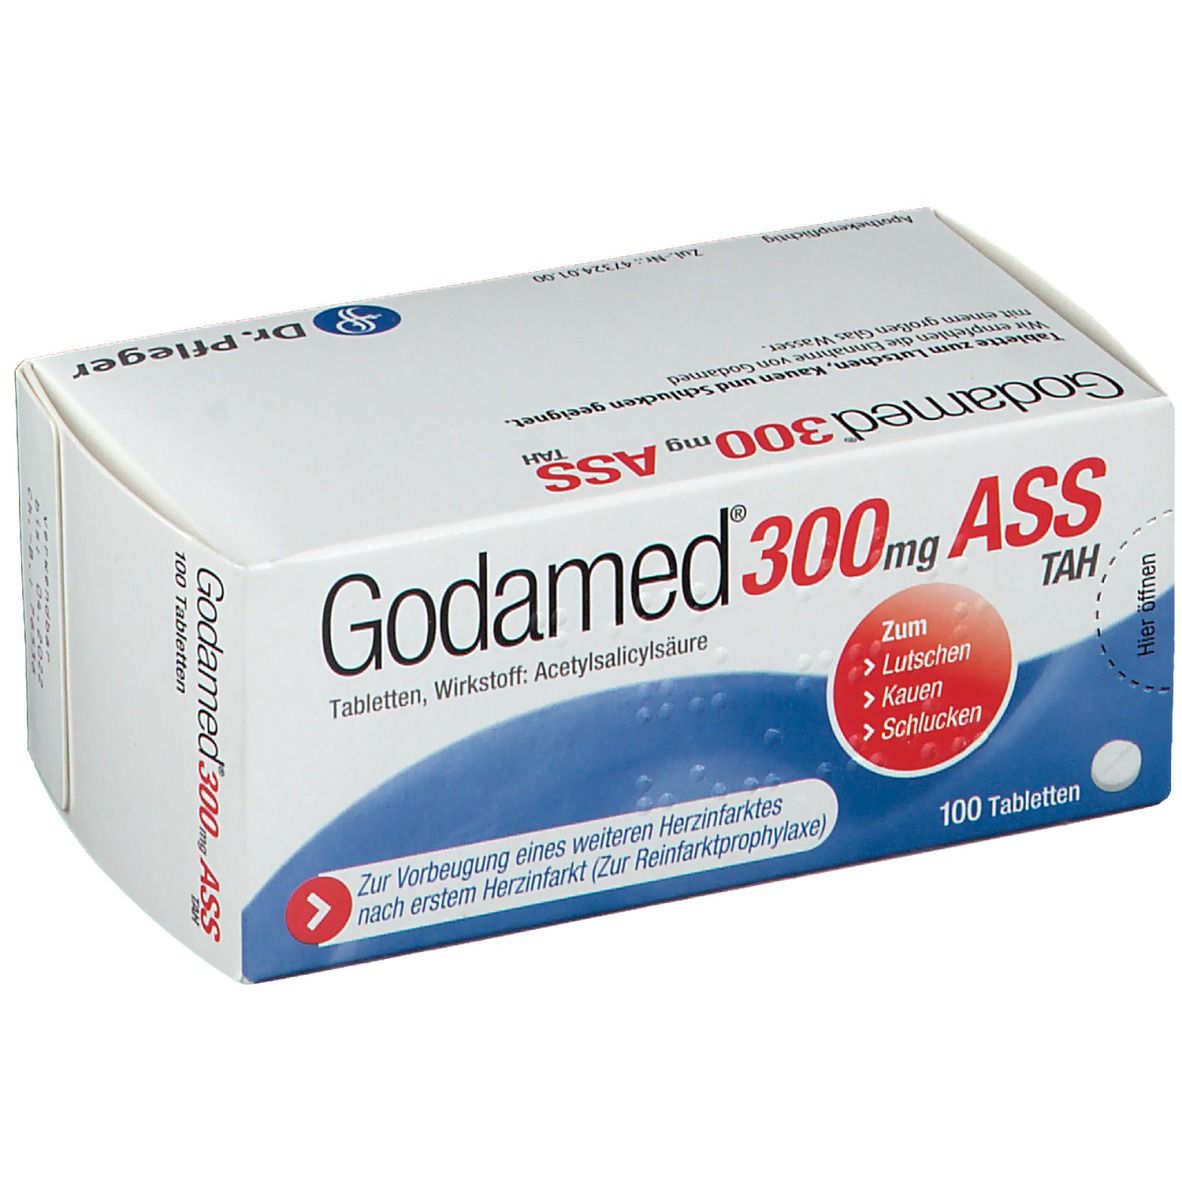 Godamed® 300 mg ASS TAH